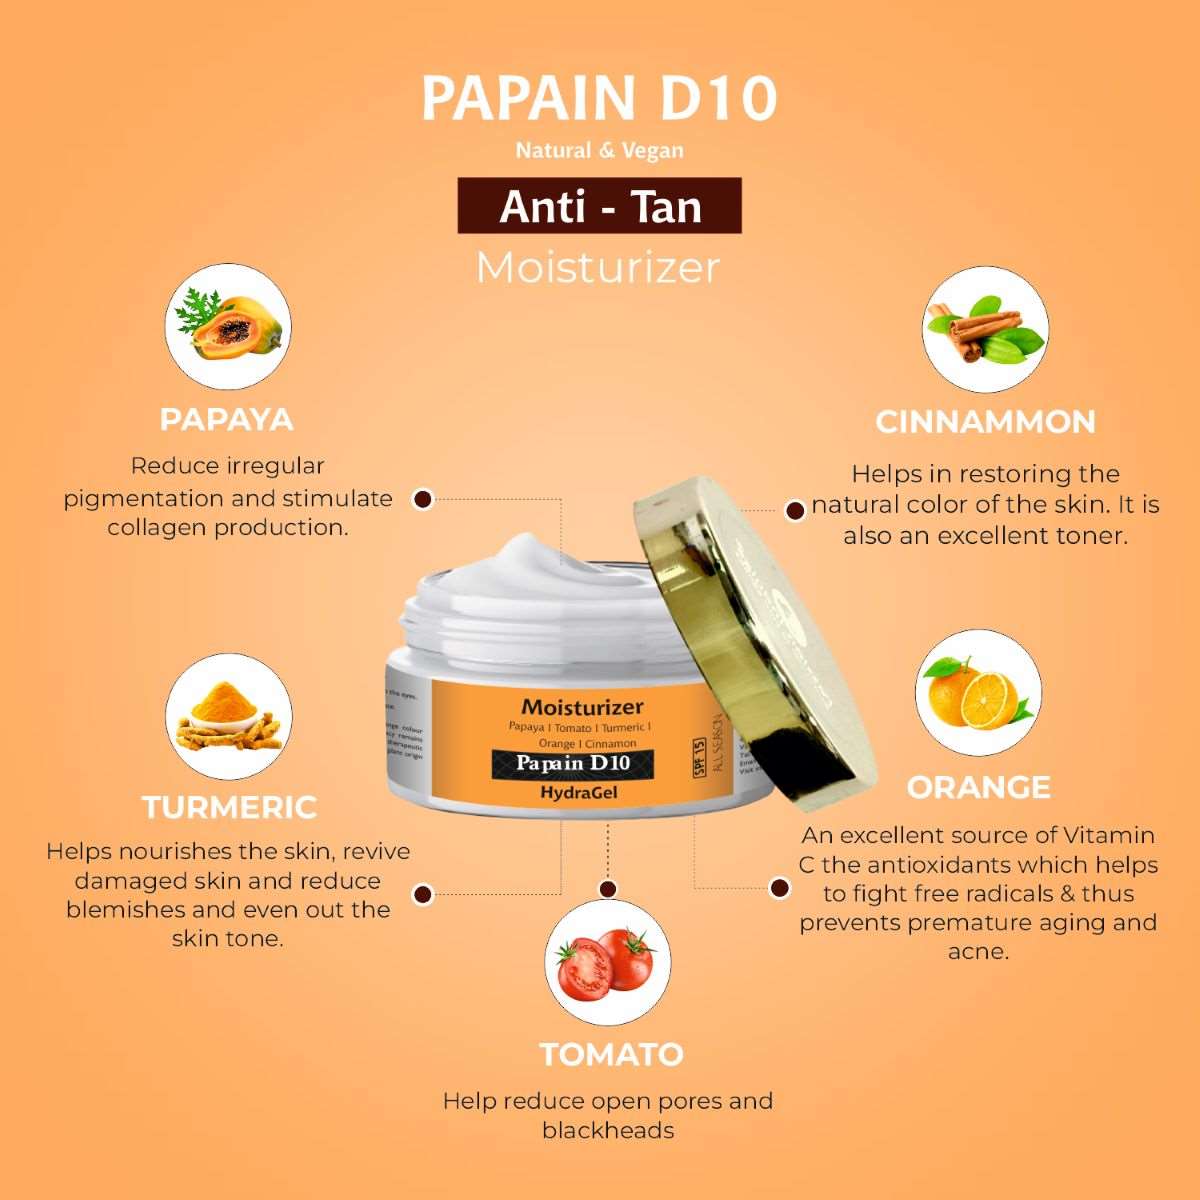 Papain D10 Natural Hydra Gel Moisturizer Reduces Tan | Improves Tone & Texture | SPF 15 | UV Protection |All Skin Type | For all Women & Men | Ayurvedic | Natural & Vegan